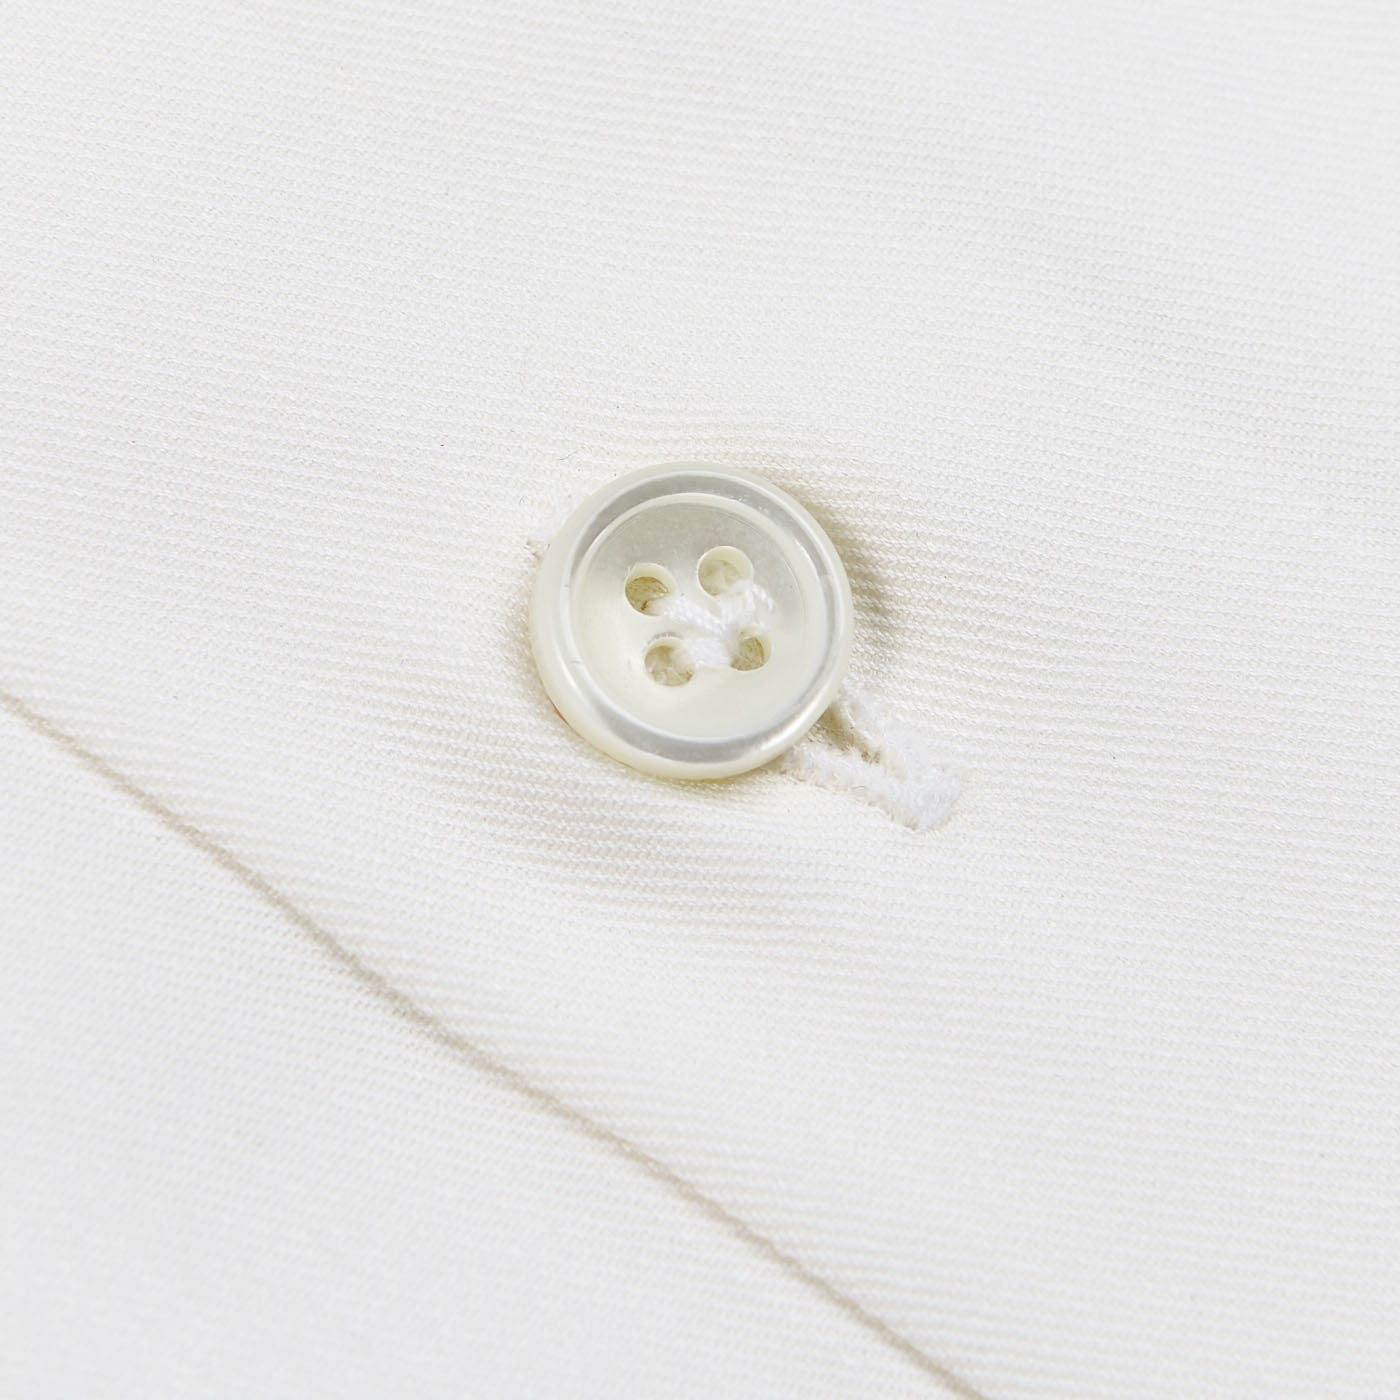 Mazzarelli Off White Cotton Twill BD Slim Shirt Button